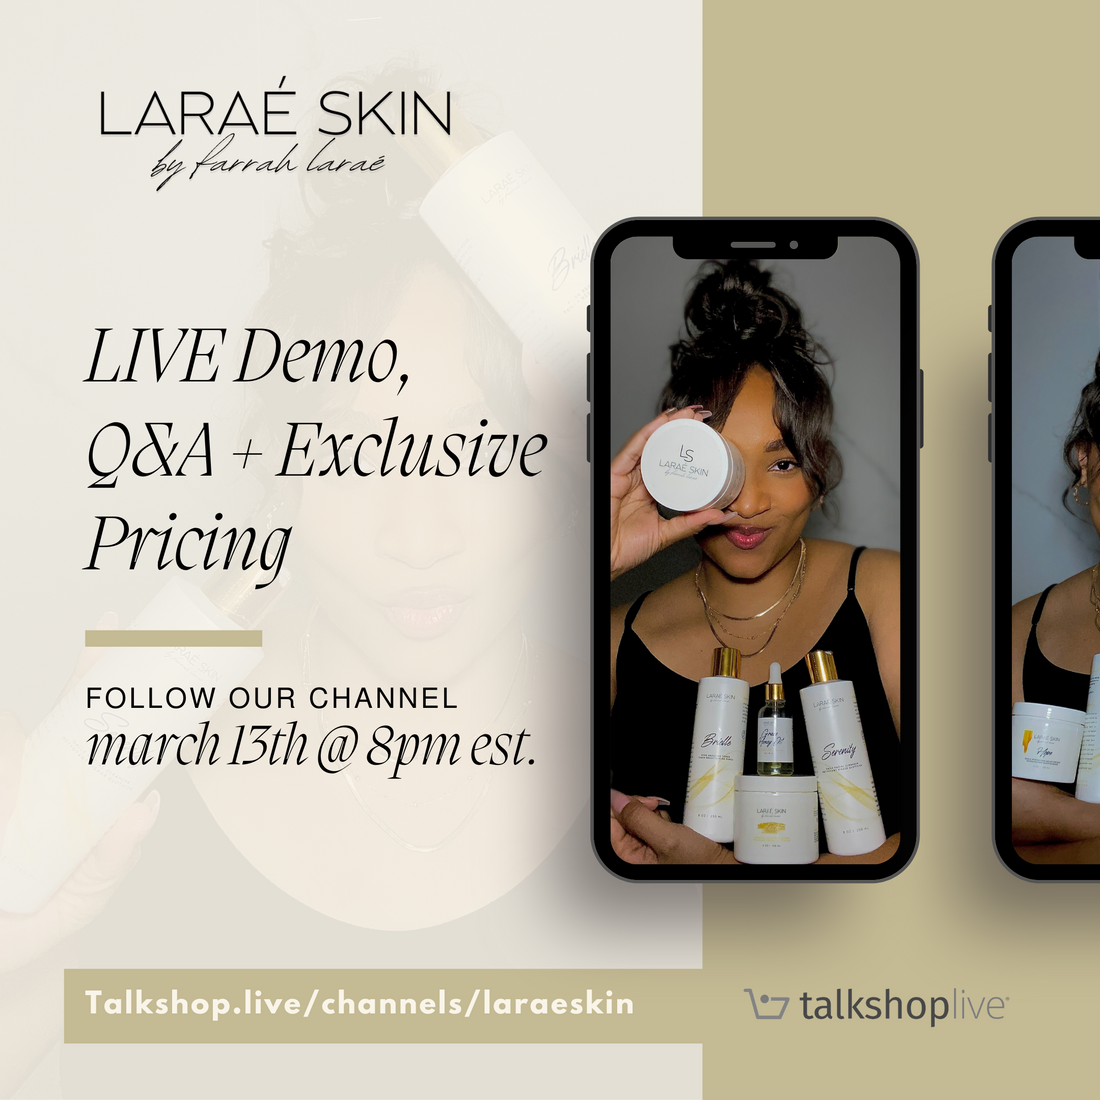 Catch LaRaé Skin on Talk Shop LIVE